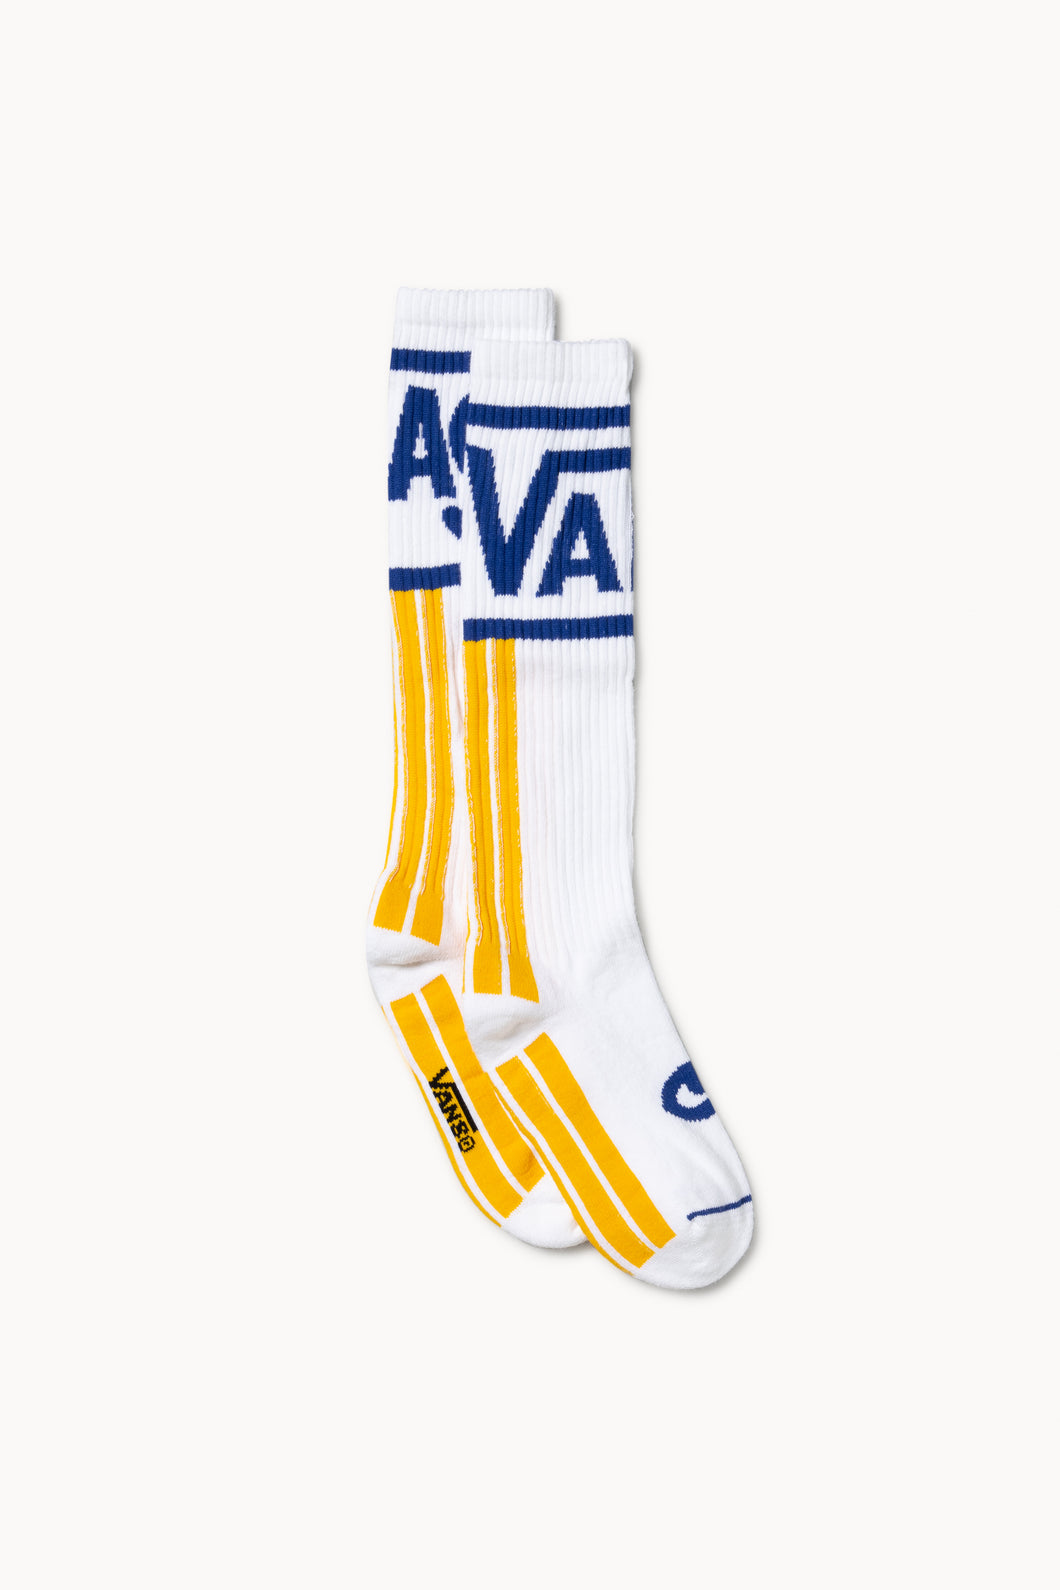 Aries x Vault by Vans Sports Socks